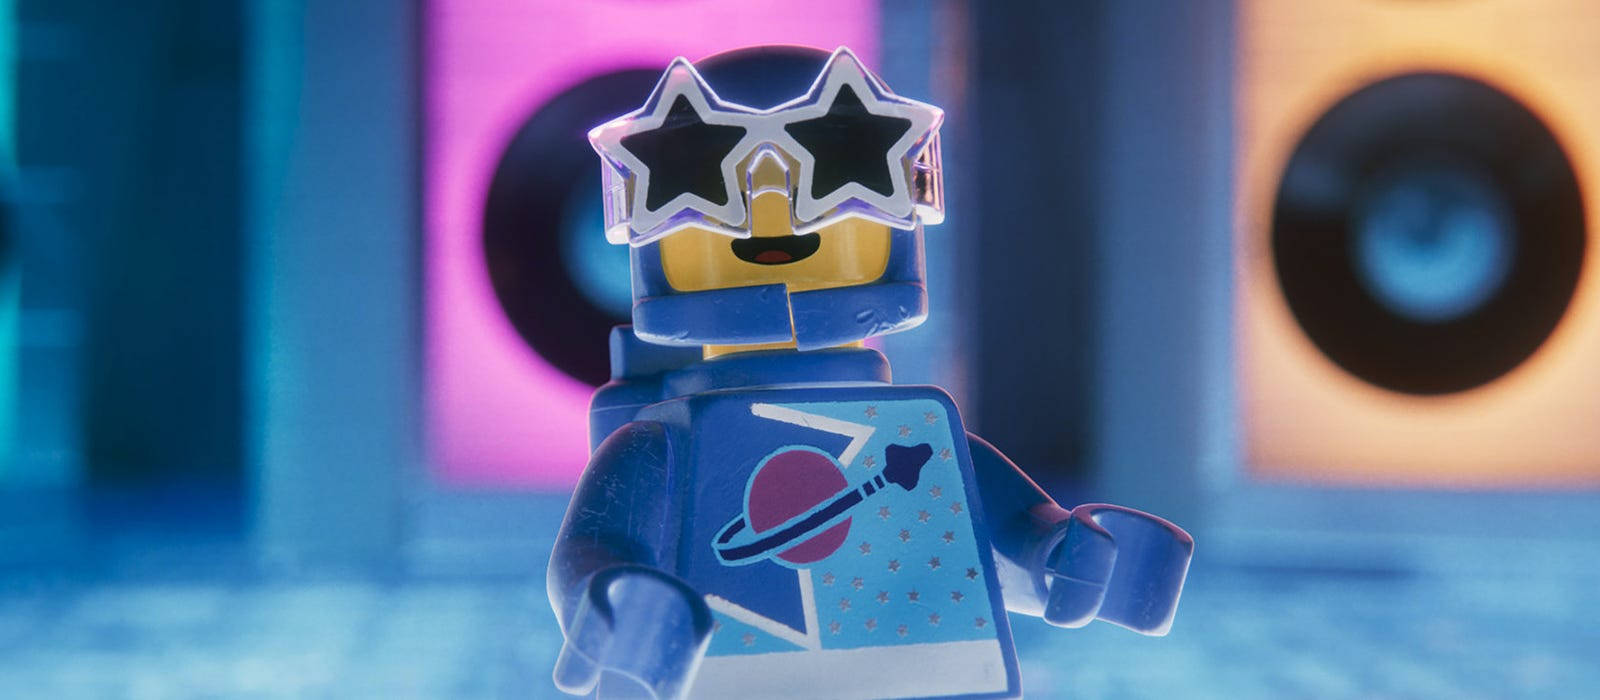 The Lego Movie Astronaut